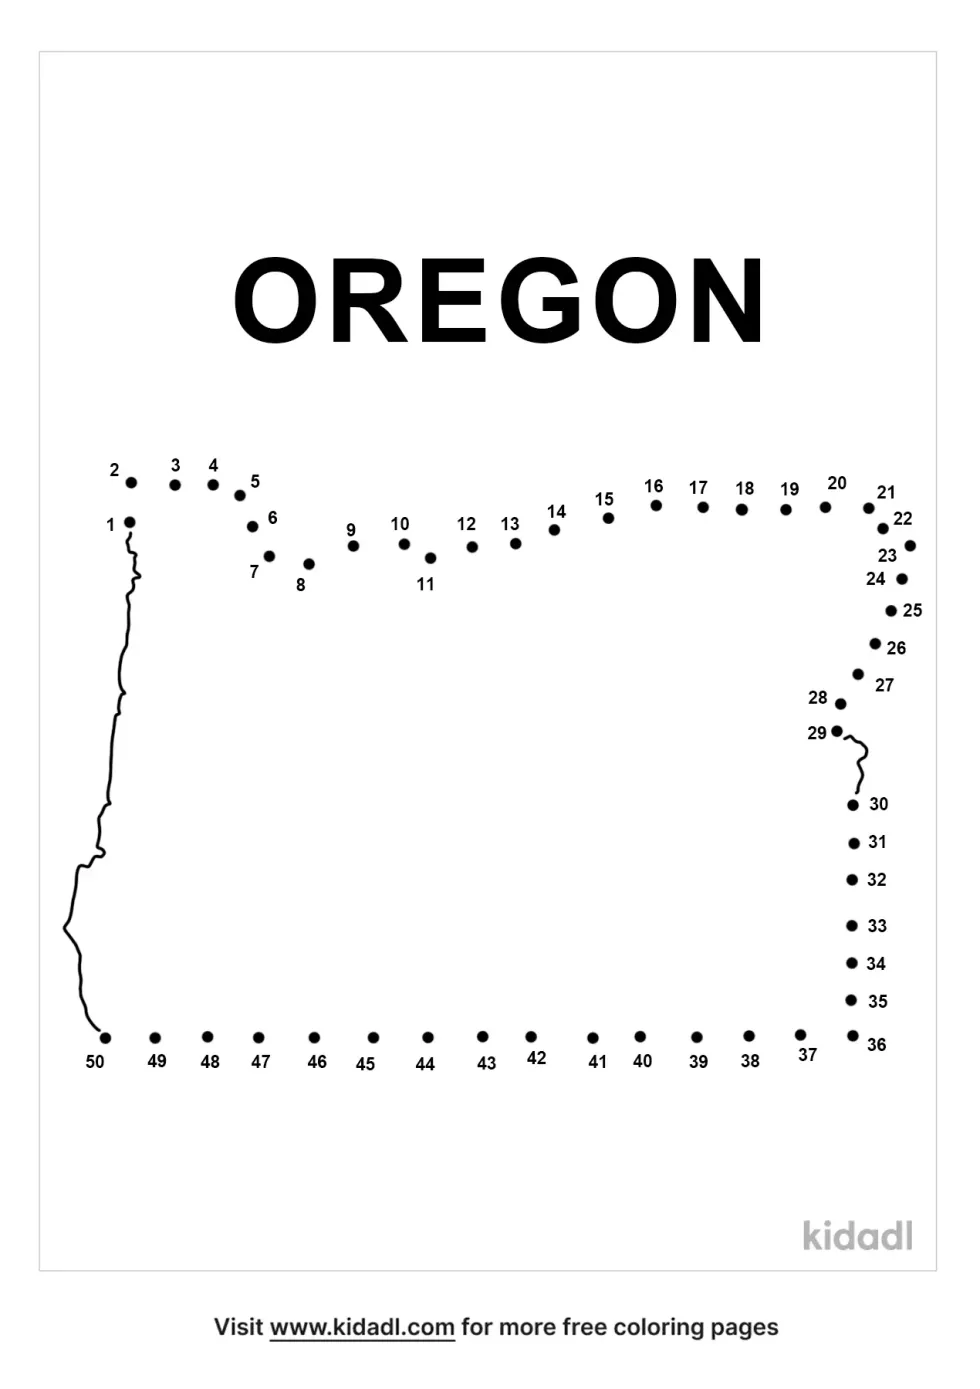 Oregon Dot To Dot (Medium)